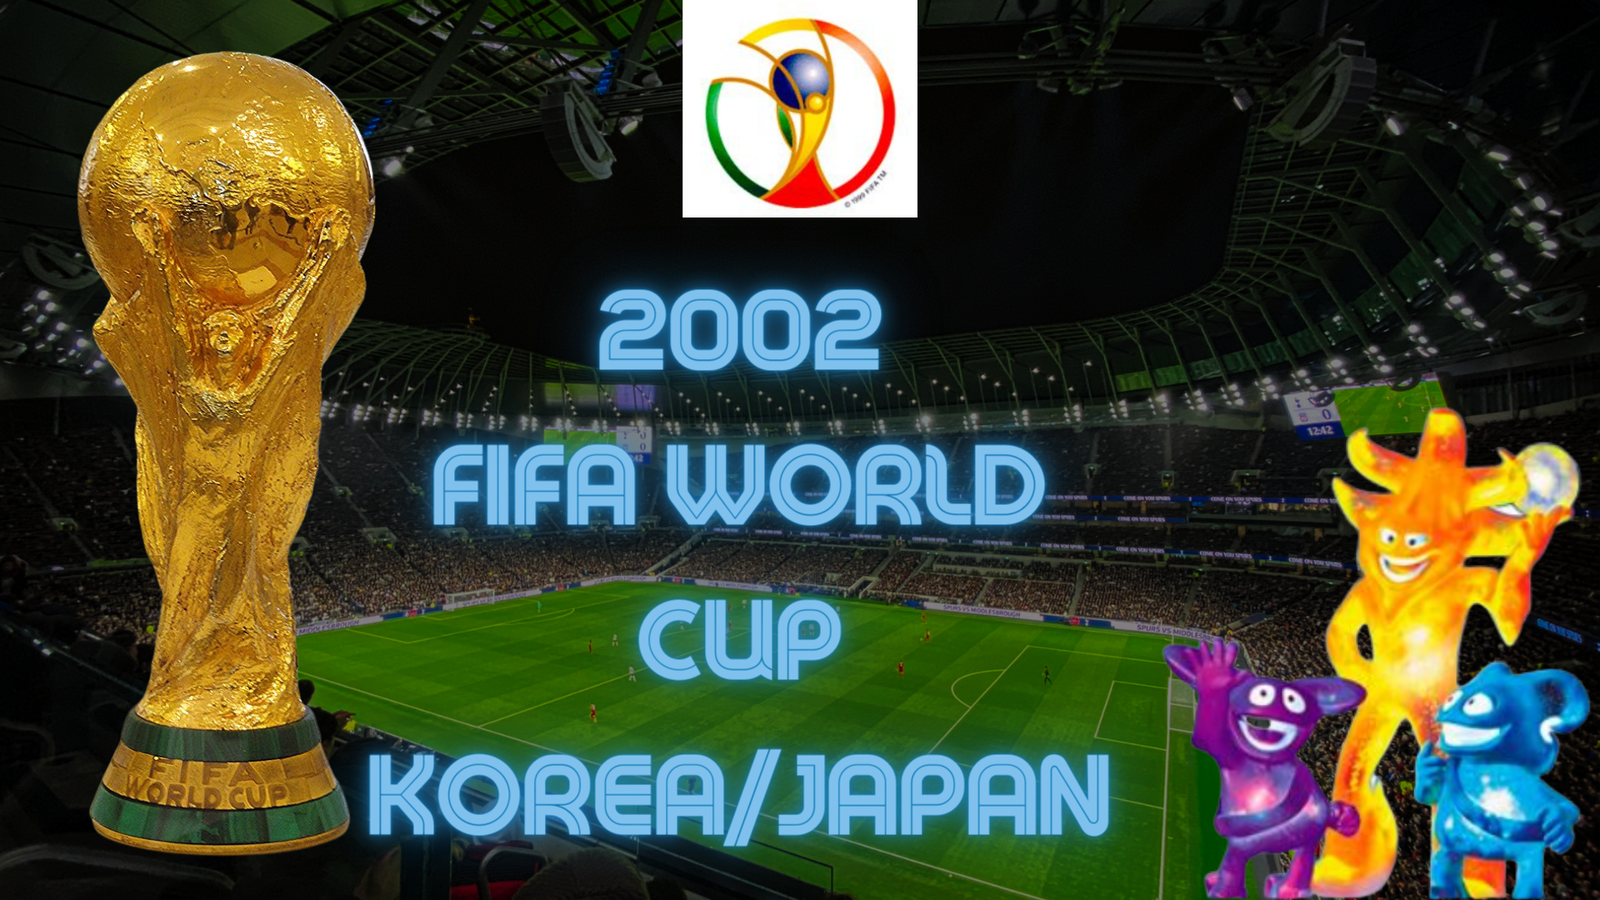 Fifa World Cup 2002